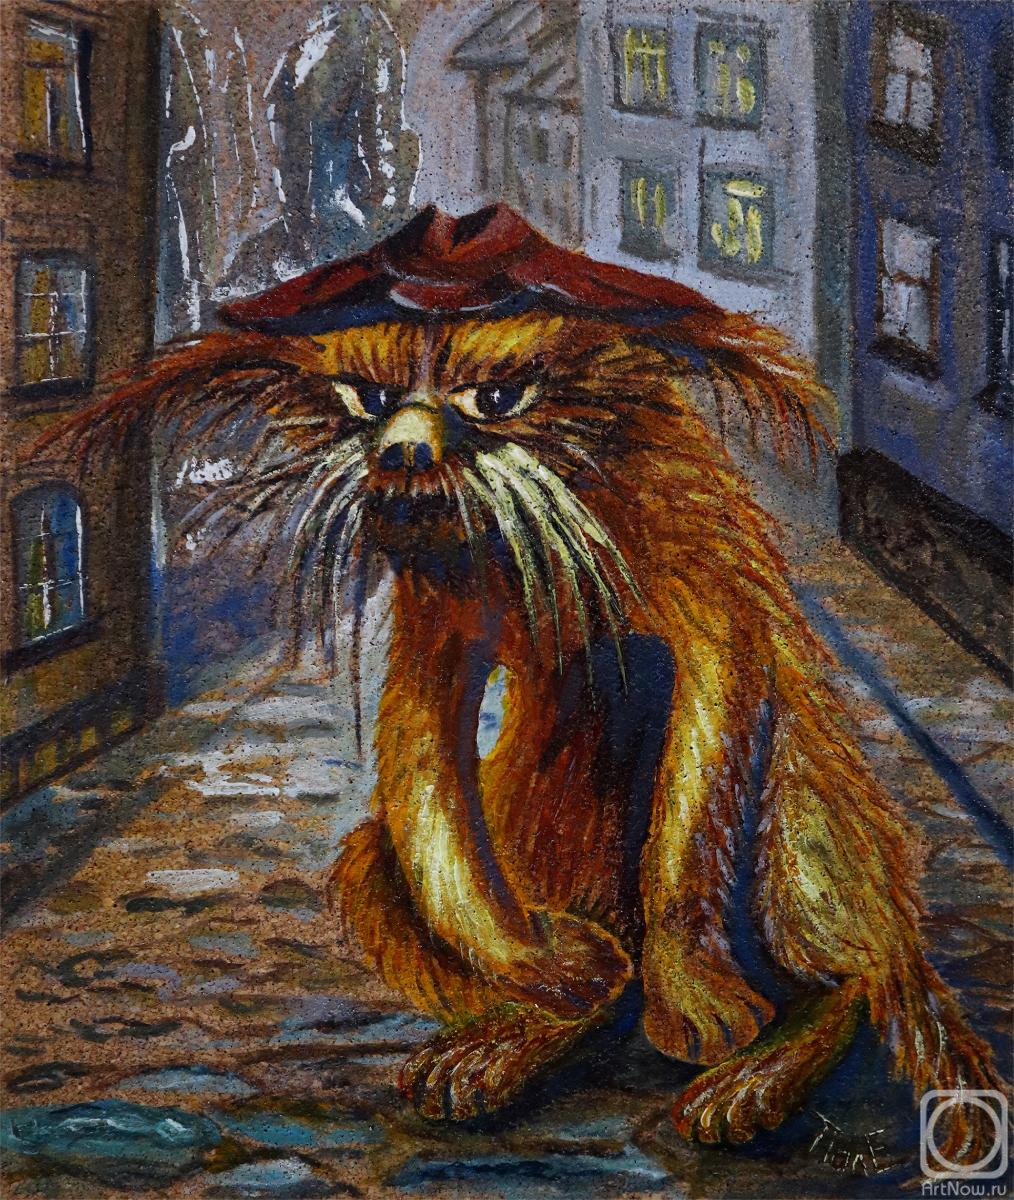 Polischuk Olga. The cat is homeless